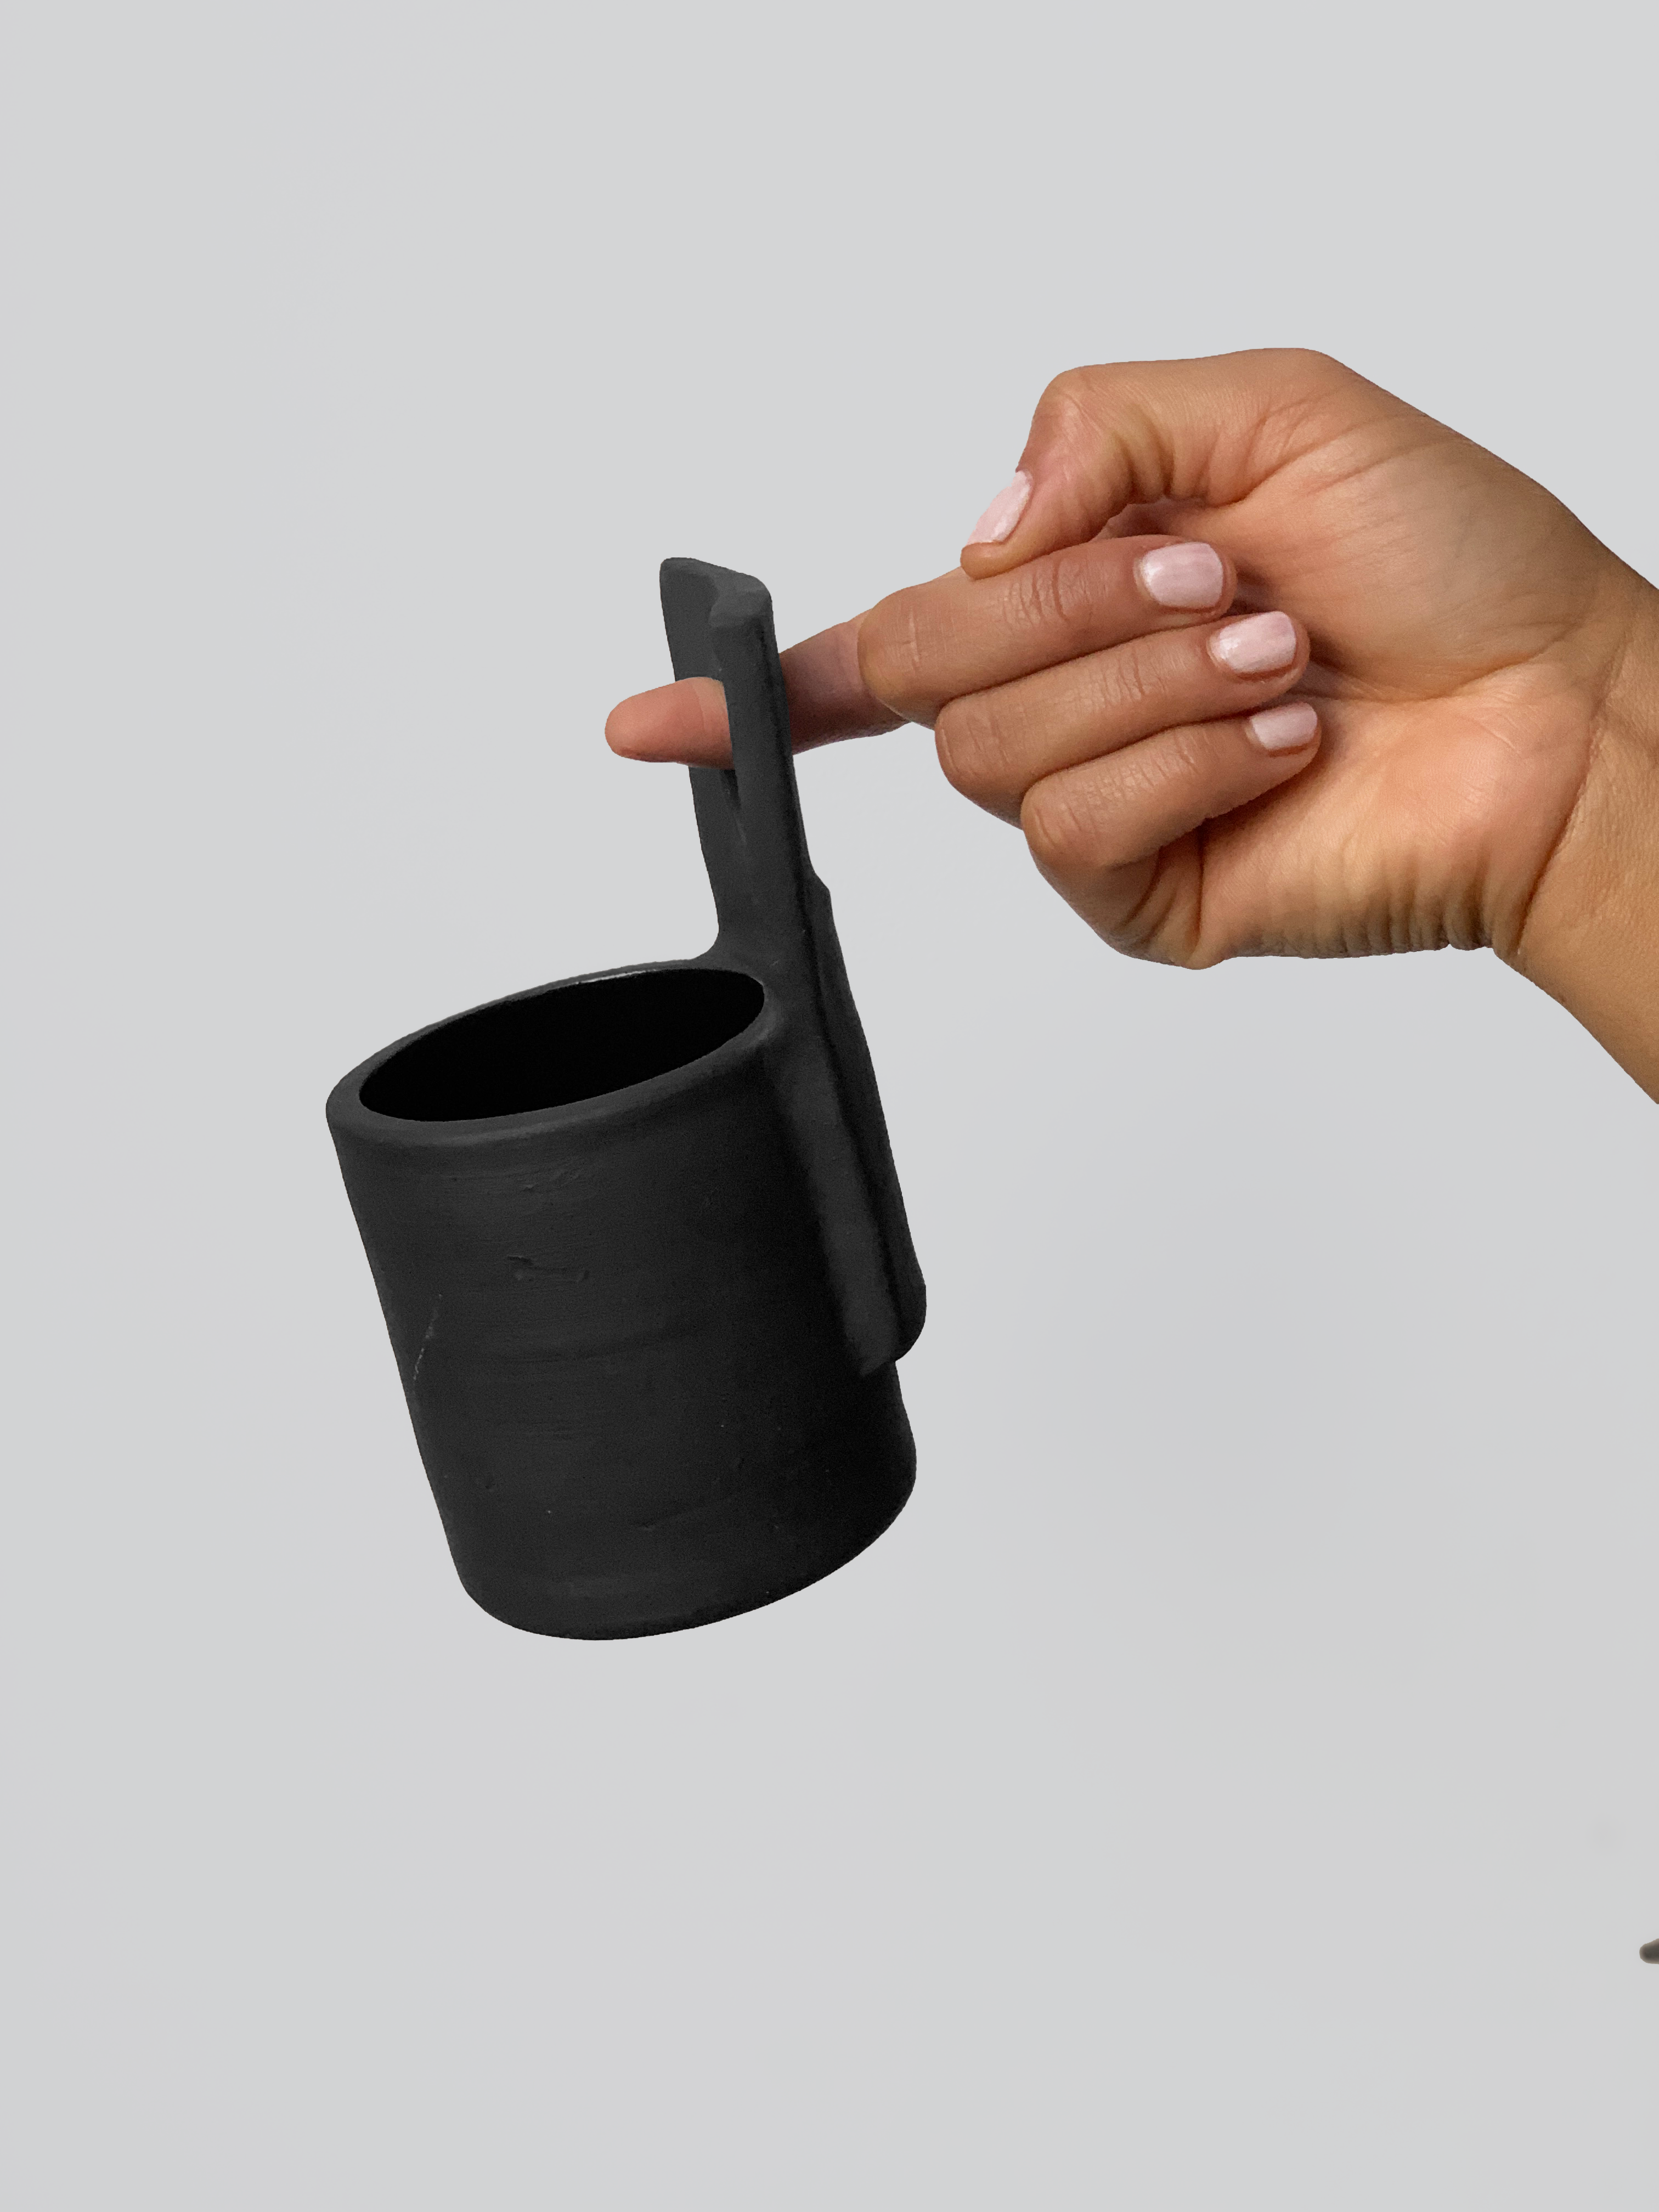 Black matte stoneware ceramic mug with upwards facing flat square circle center as the handle.